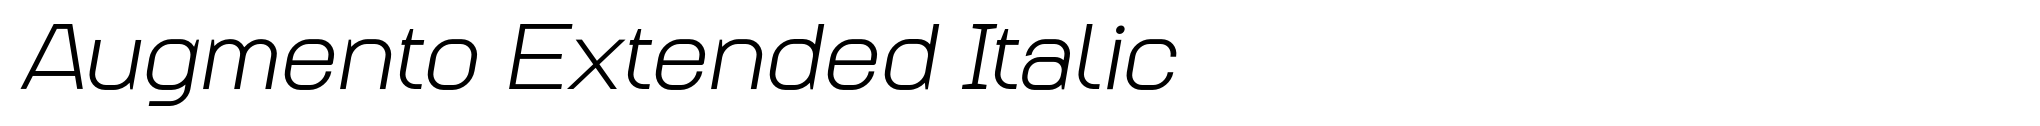 Augmento Extended Italic image